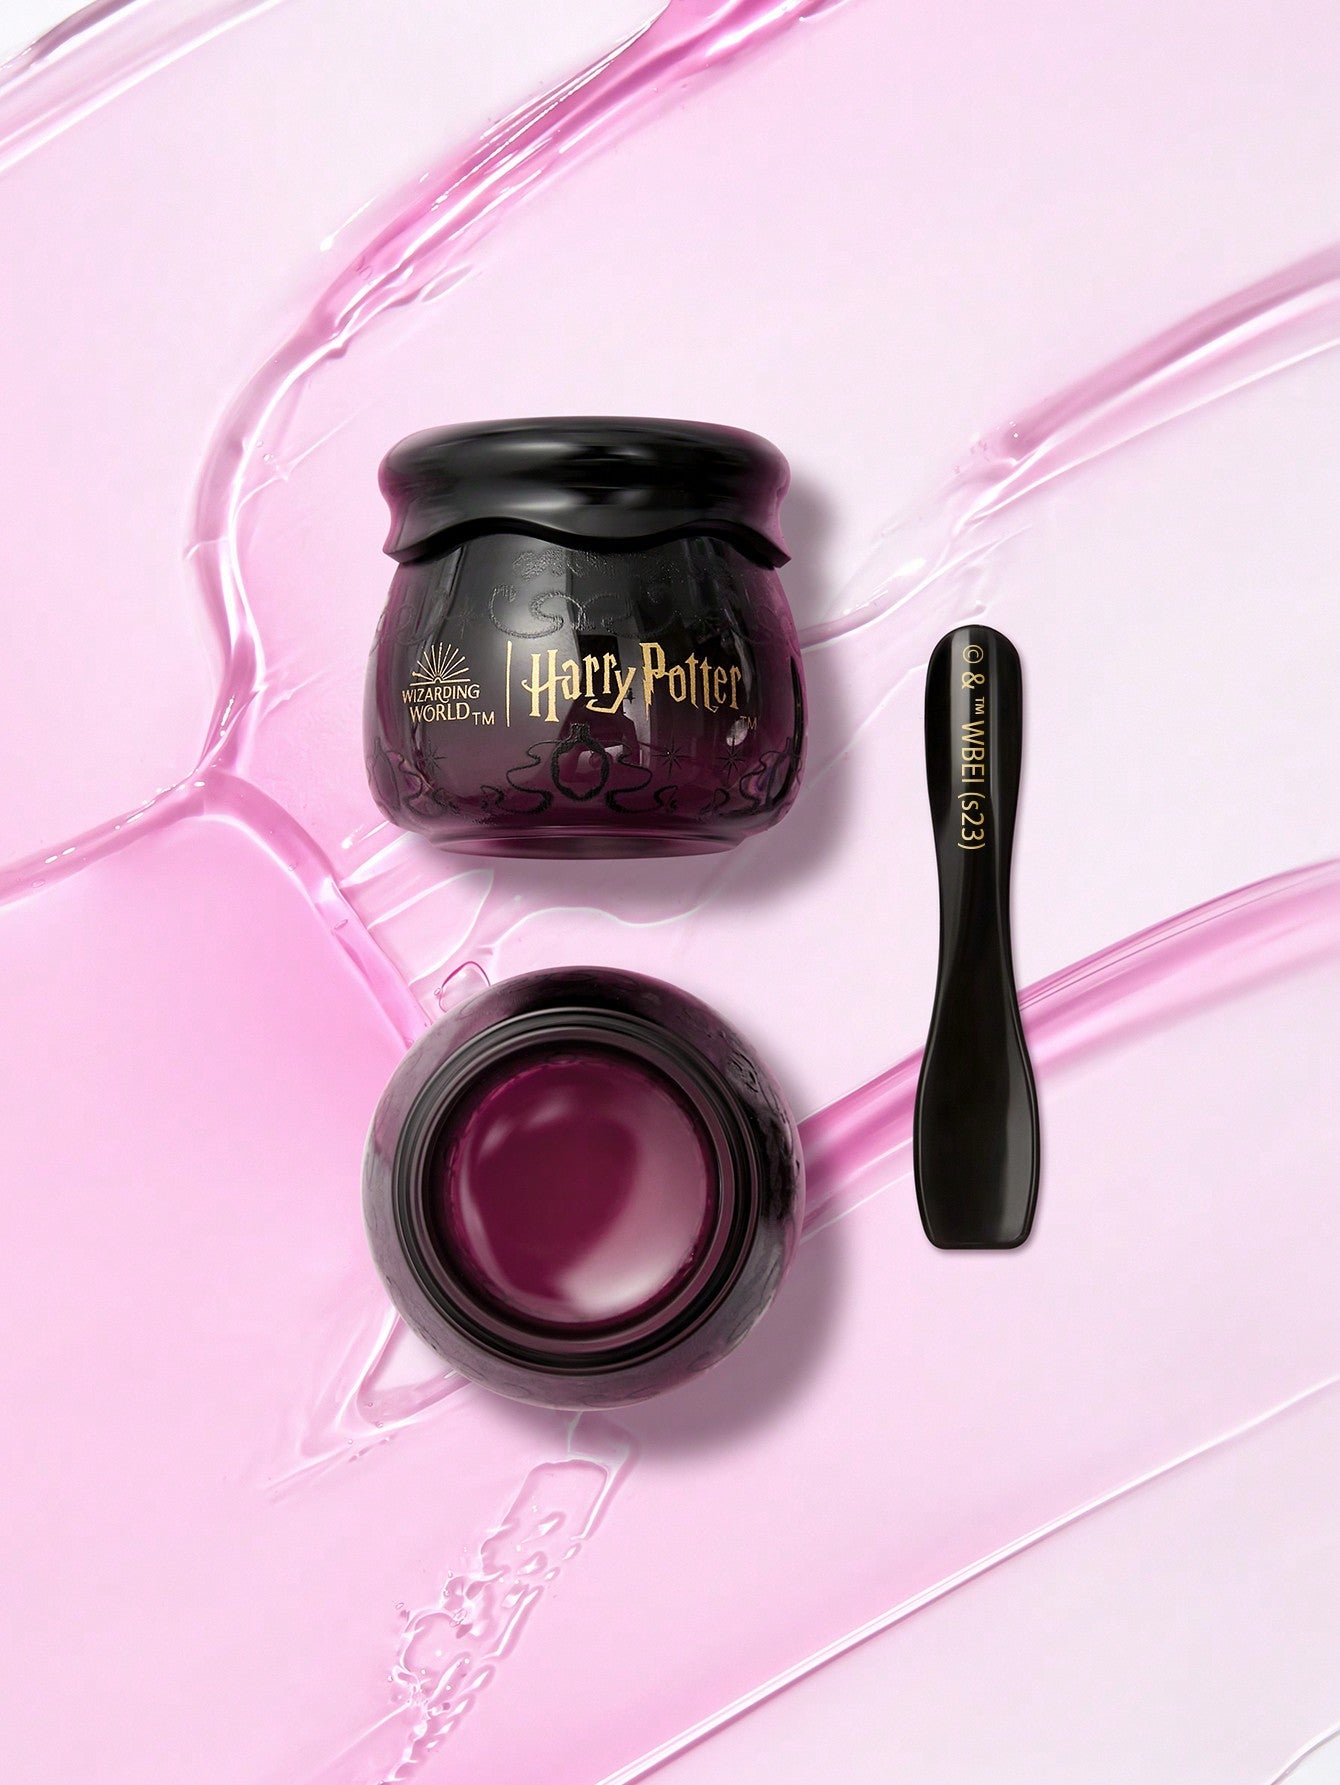 SHEGLAM Magic Cauldron Lip Mask Moisturizing Gel Lip Care Purple Lip Balm - Negative Apparel